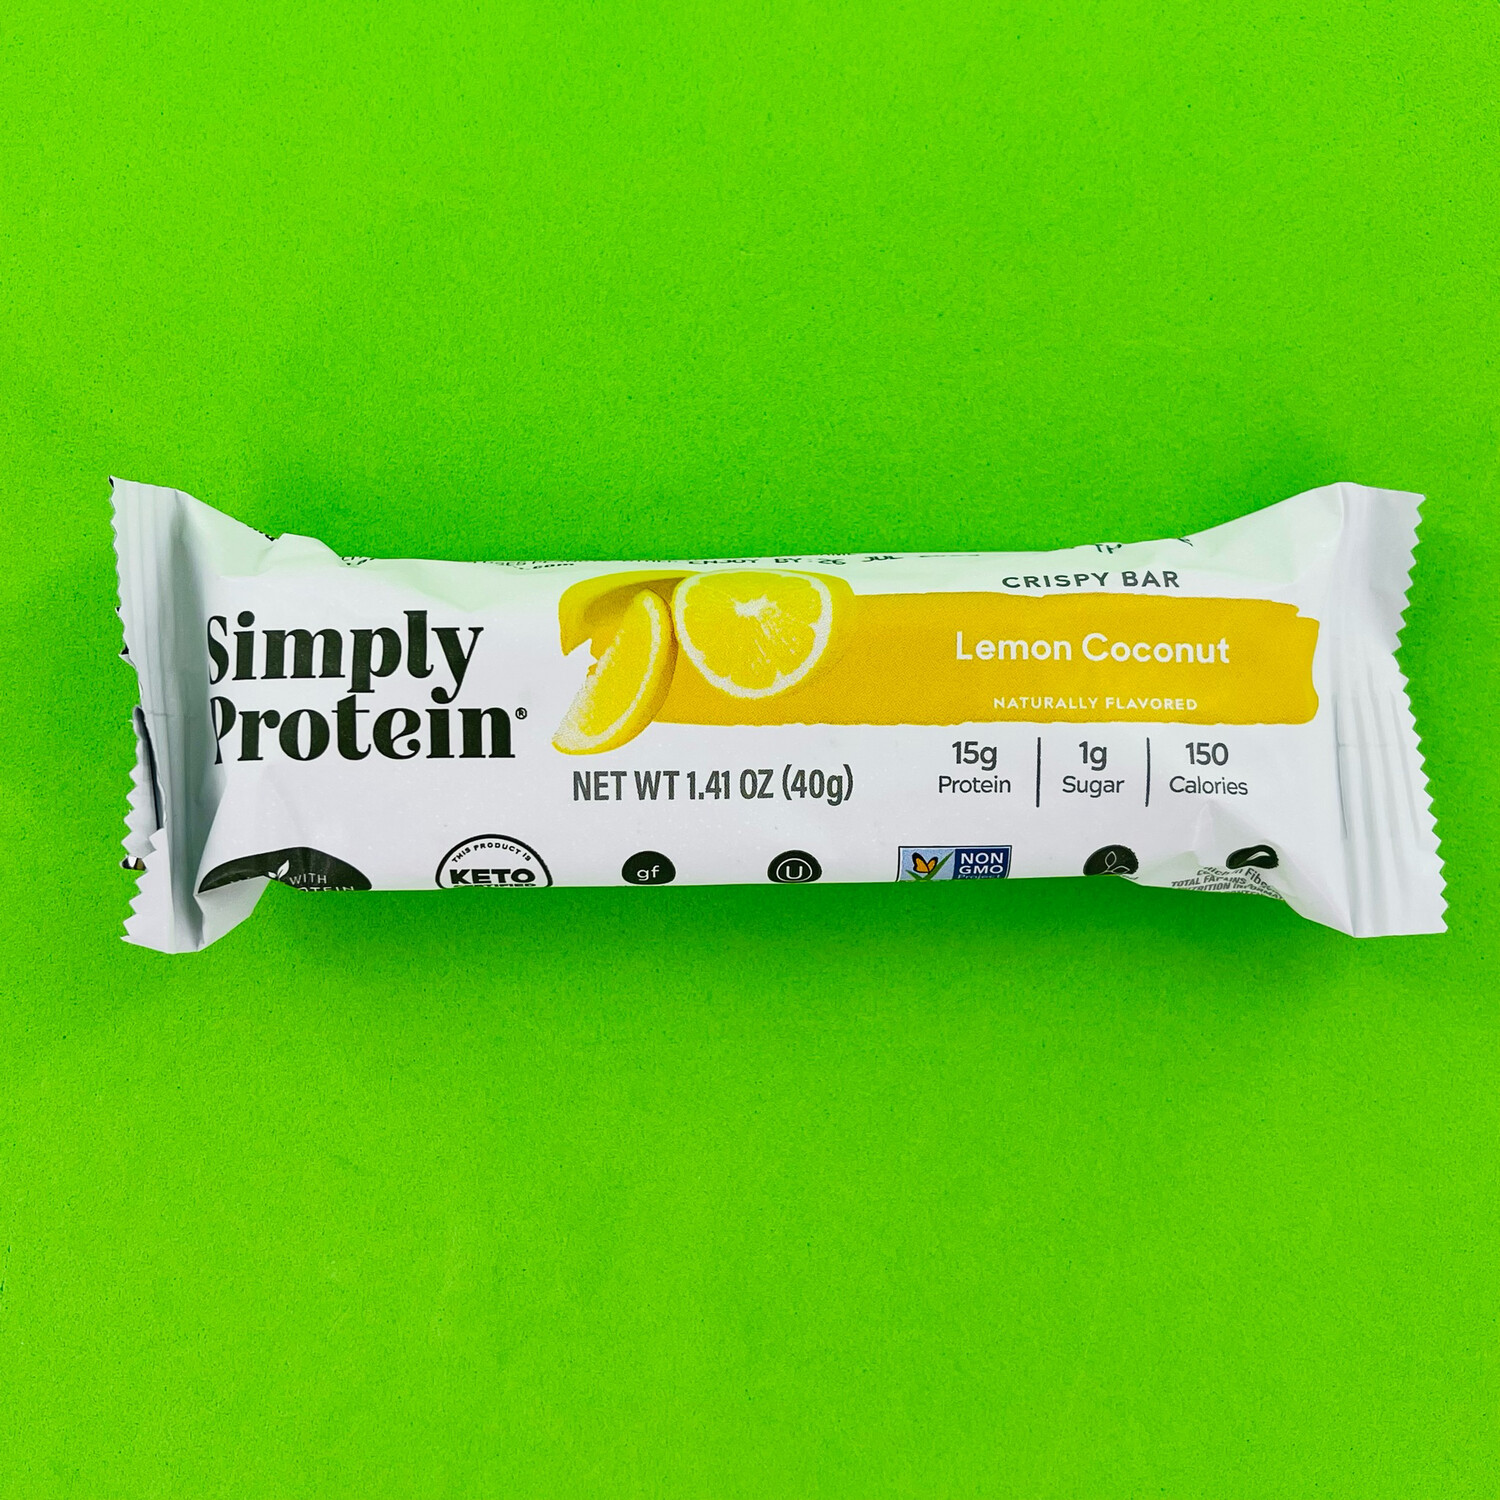 Simply Protein Crispy Bar Lemon Coconut 15g Pro Plant Based 